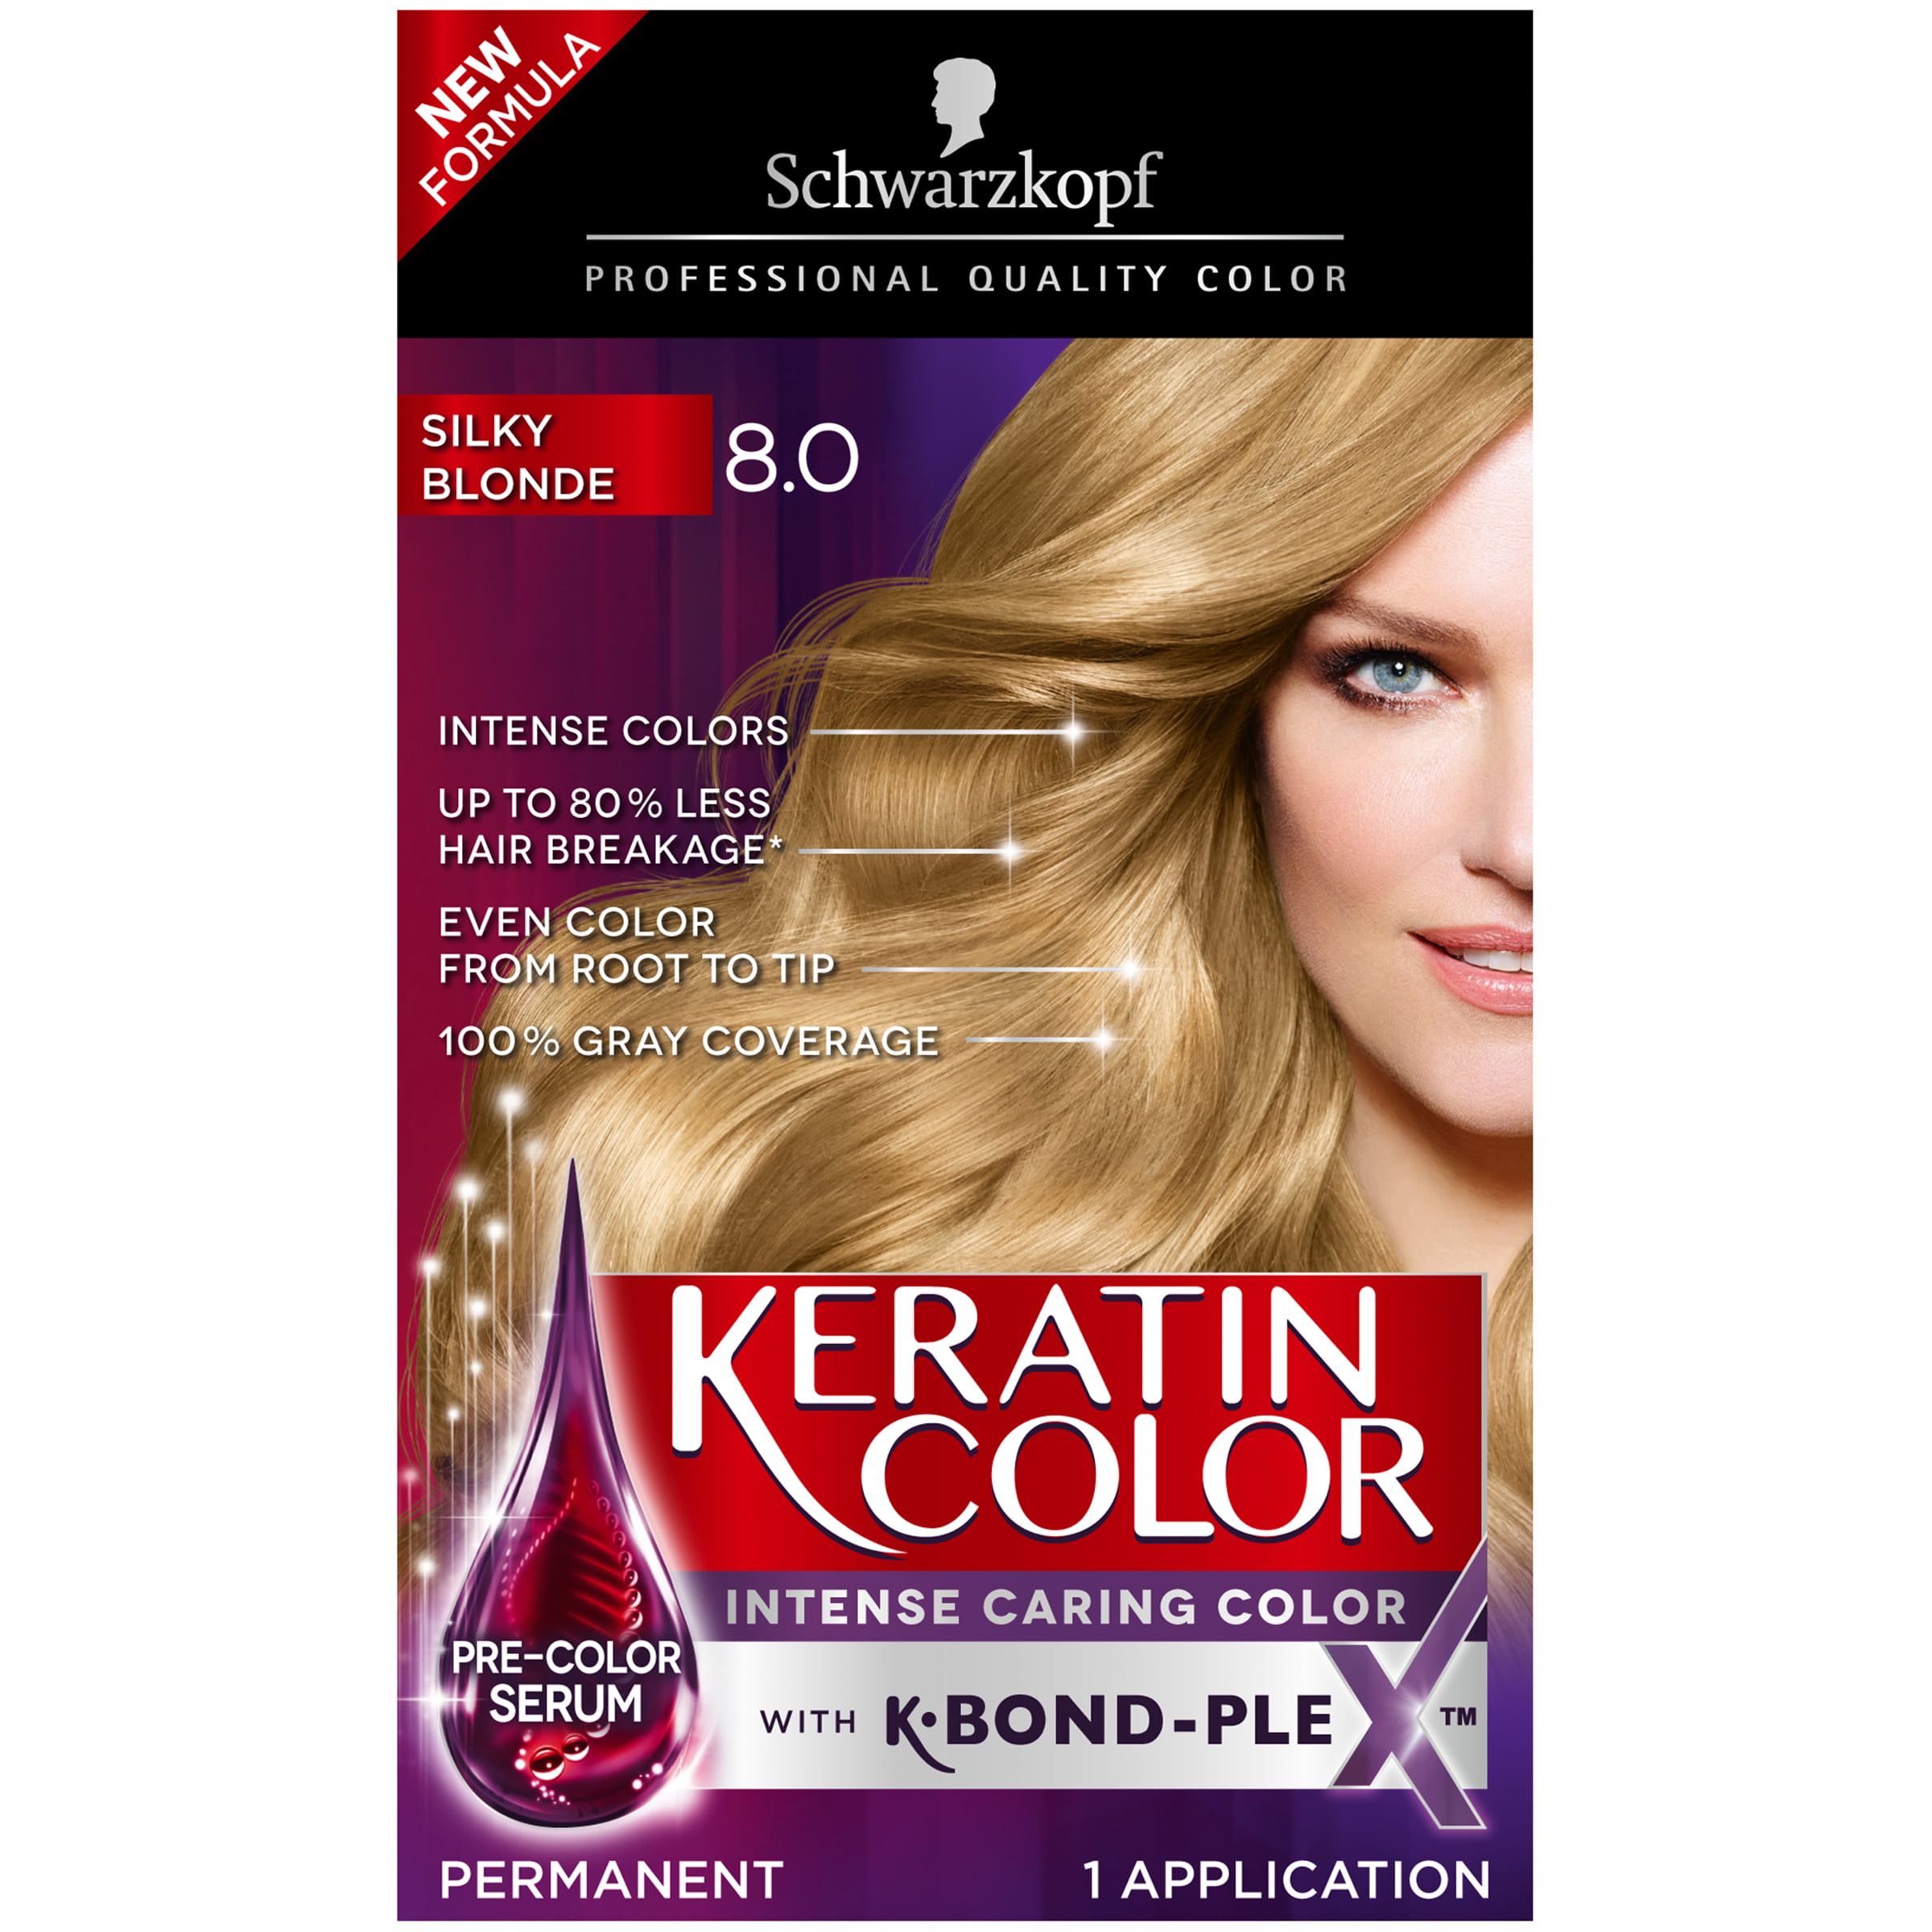 Schwarzkopf Keratin Color Anti Age Hair Color Chart